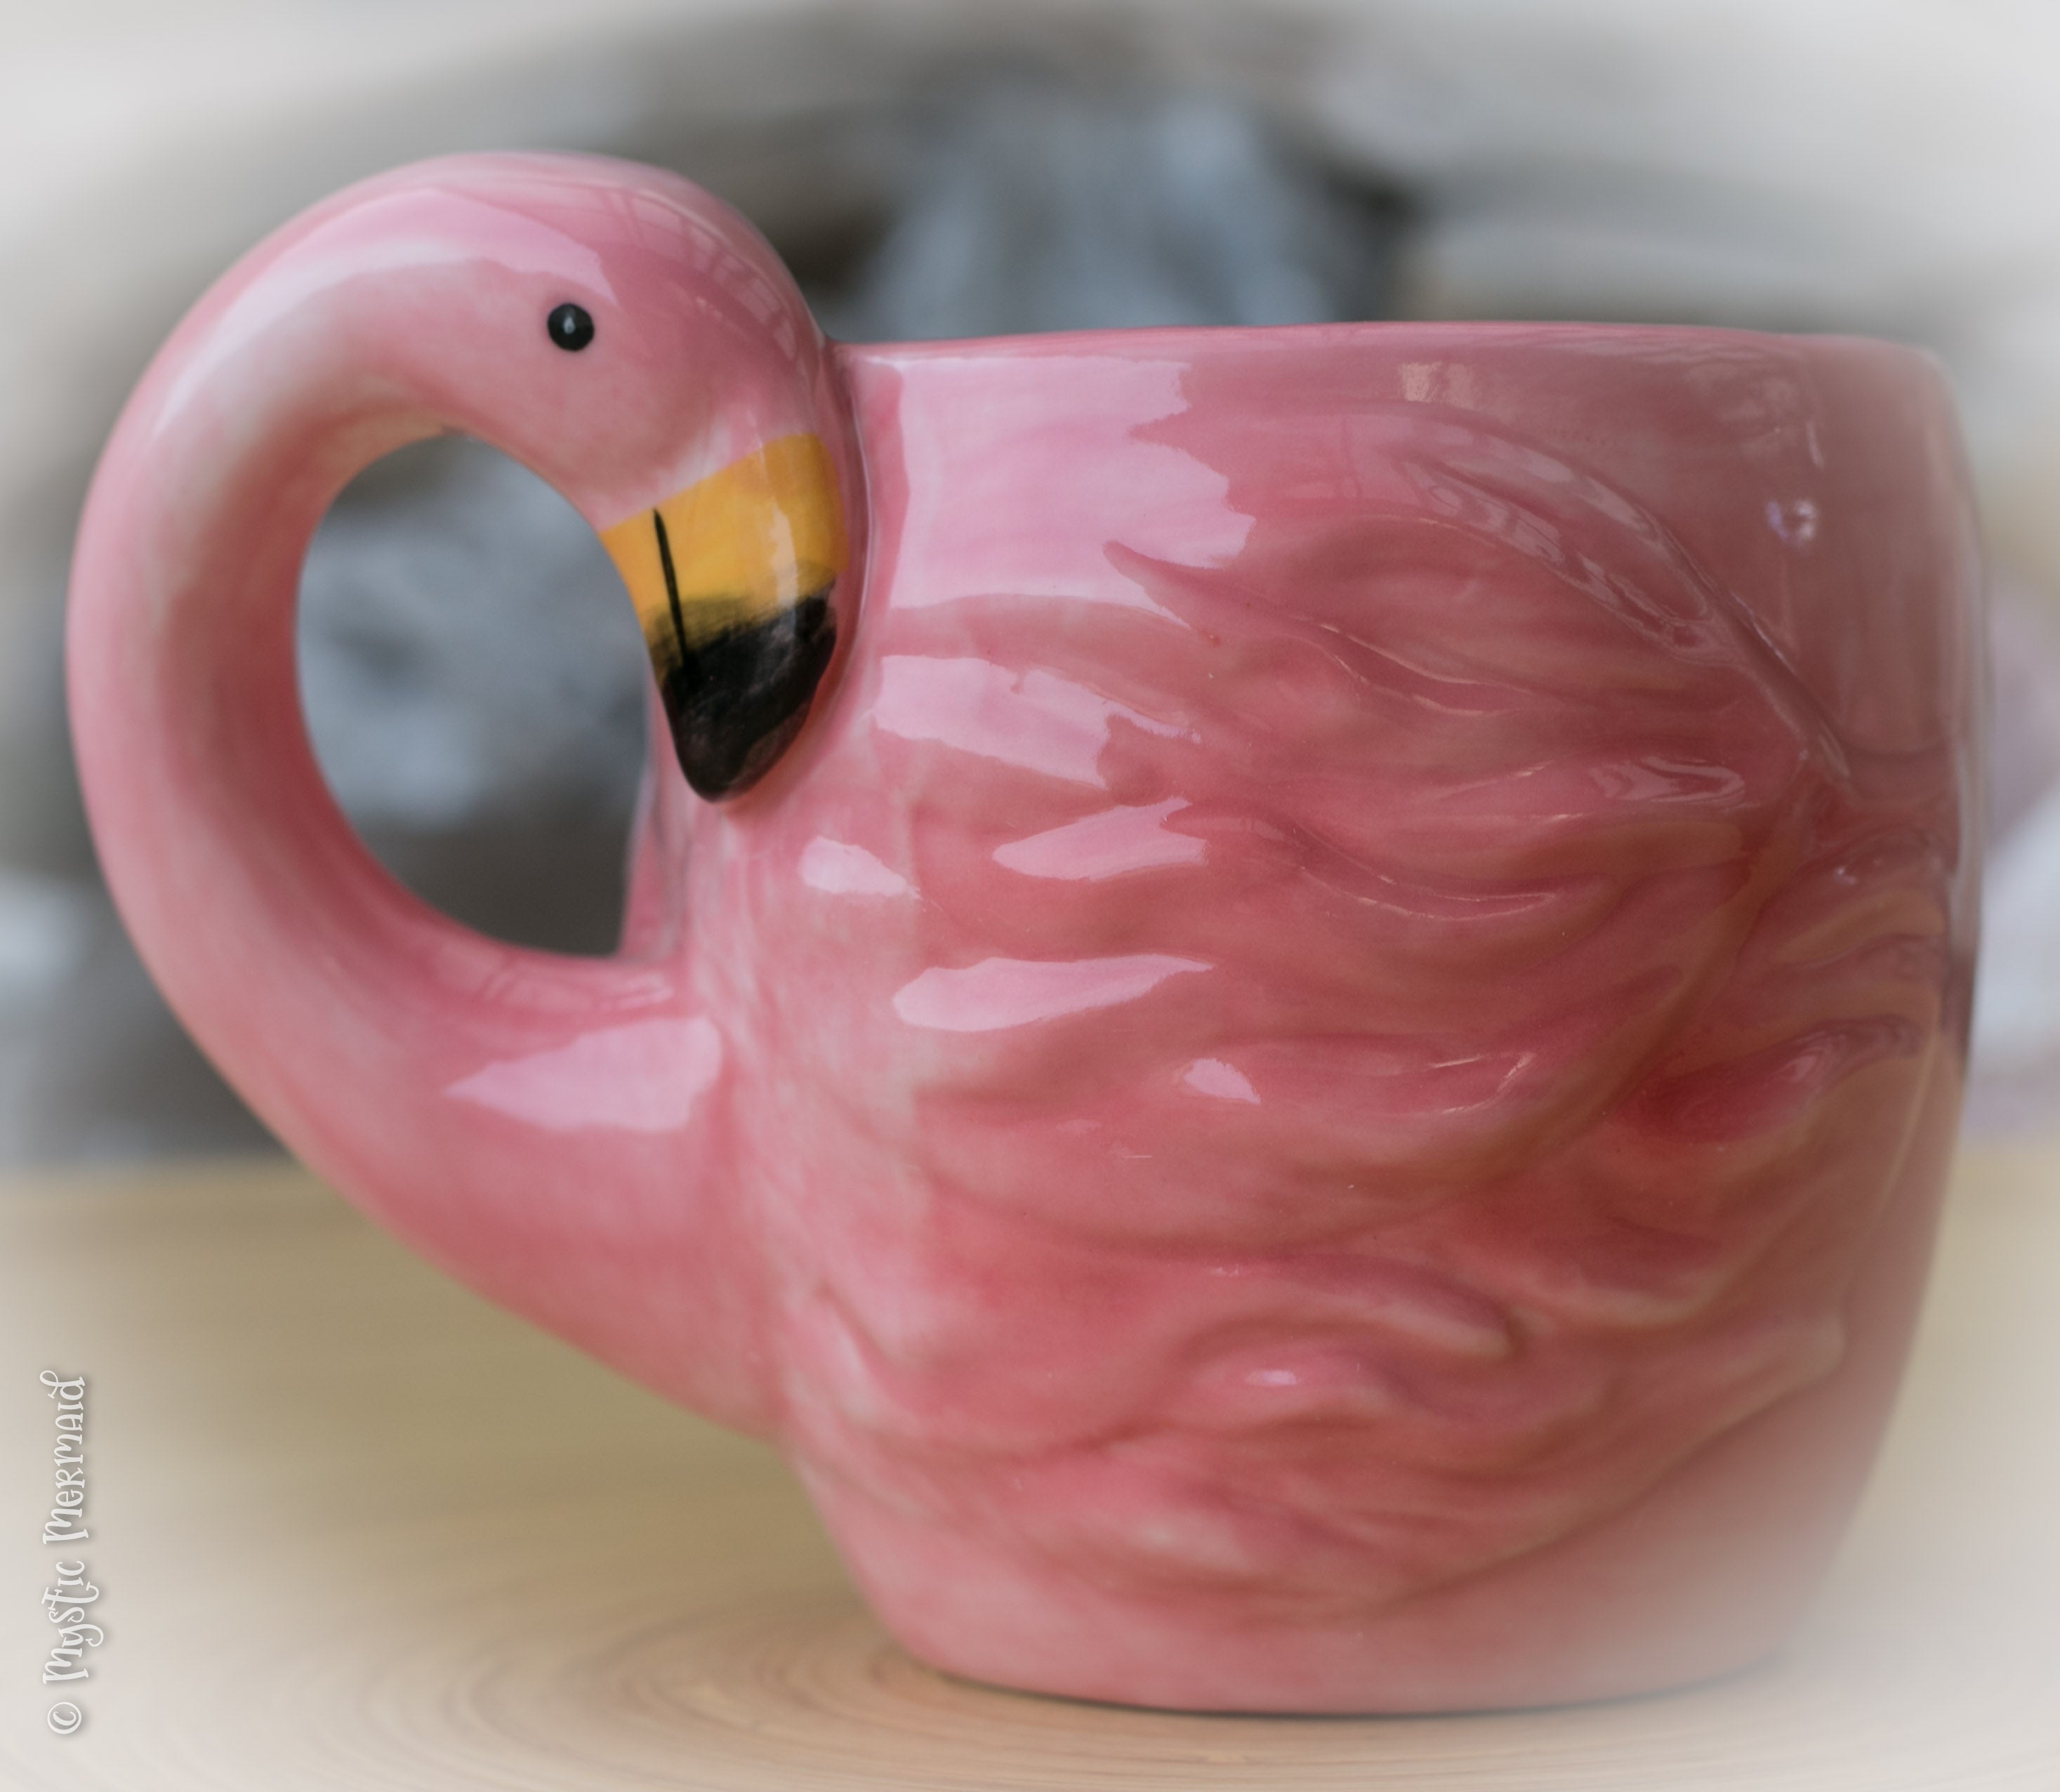 Flamboyant Flamingo Mug